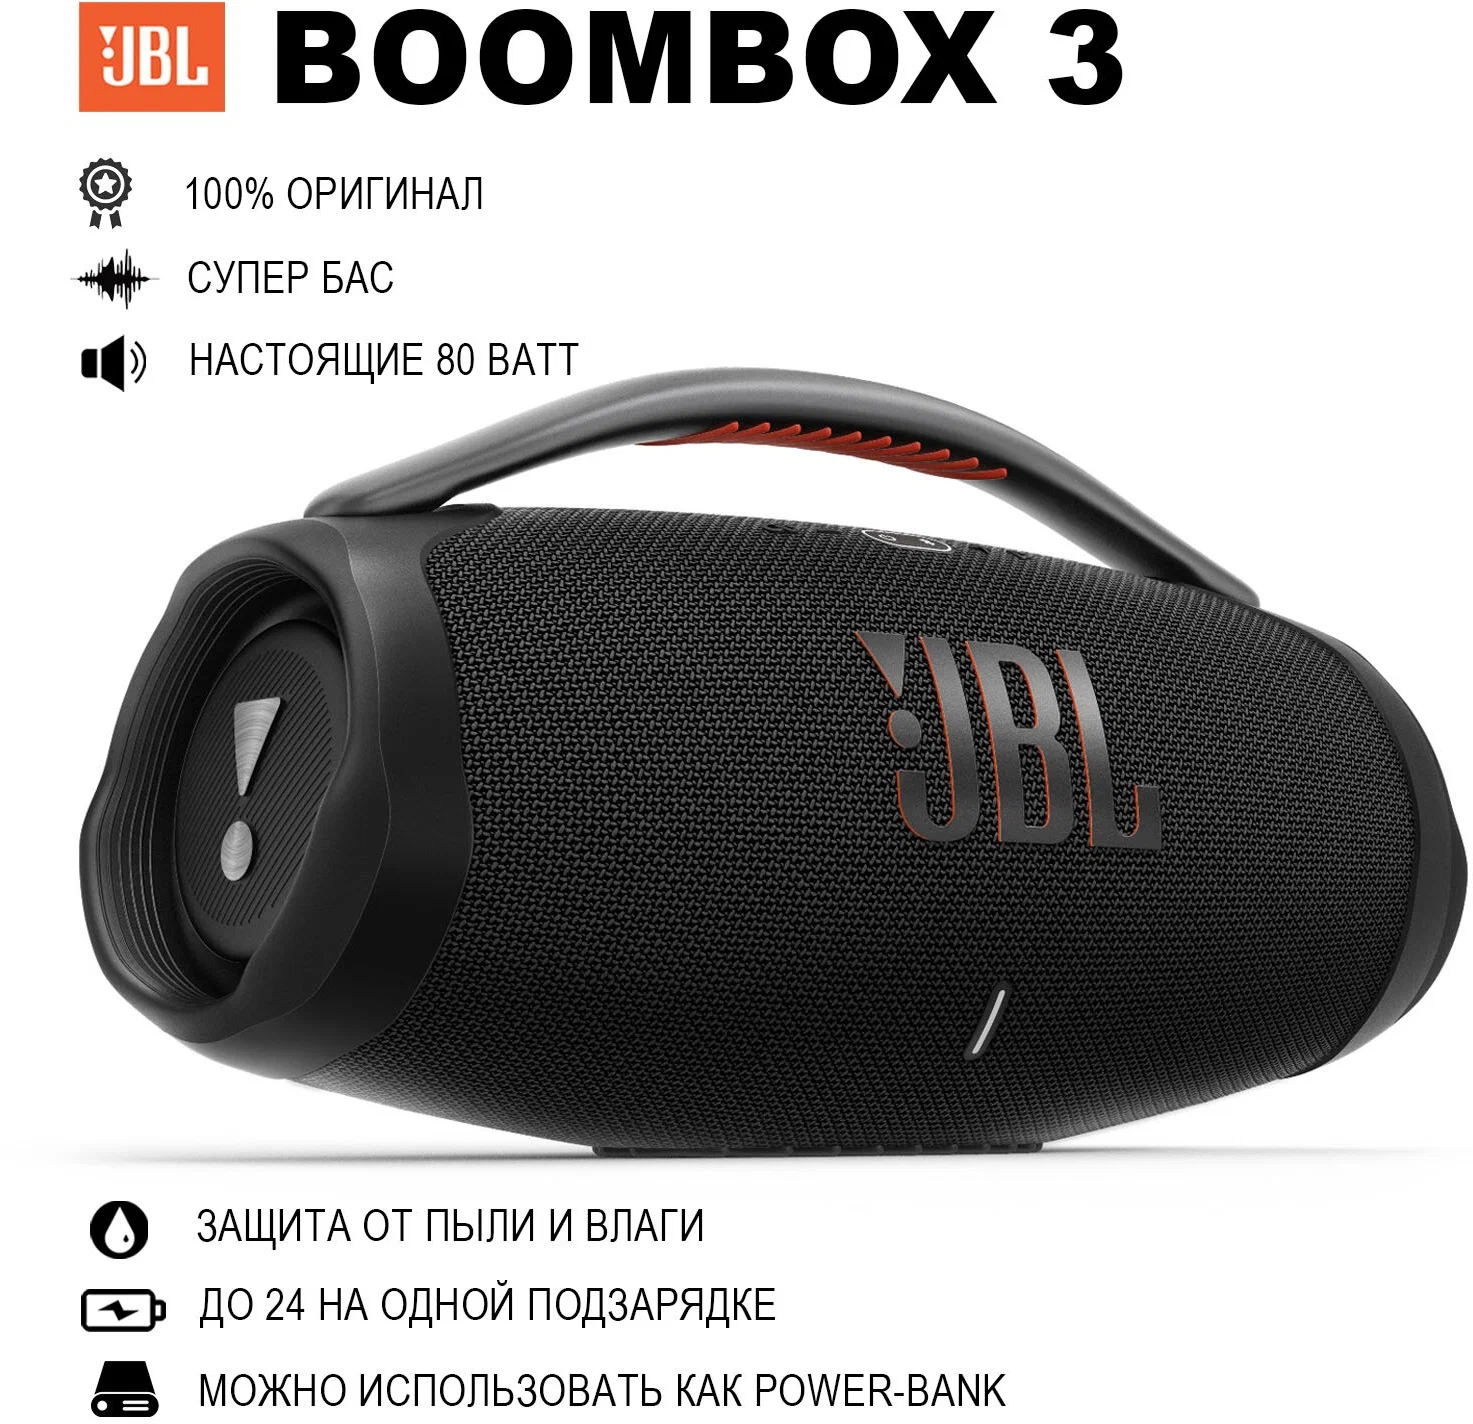 Boombox 3 оригинал. Колонка JBL Boombox 1. JBL Boombox 3. JBL Boombox 3 2022. Колонка оригинальная JBL Boombox 3.